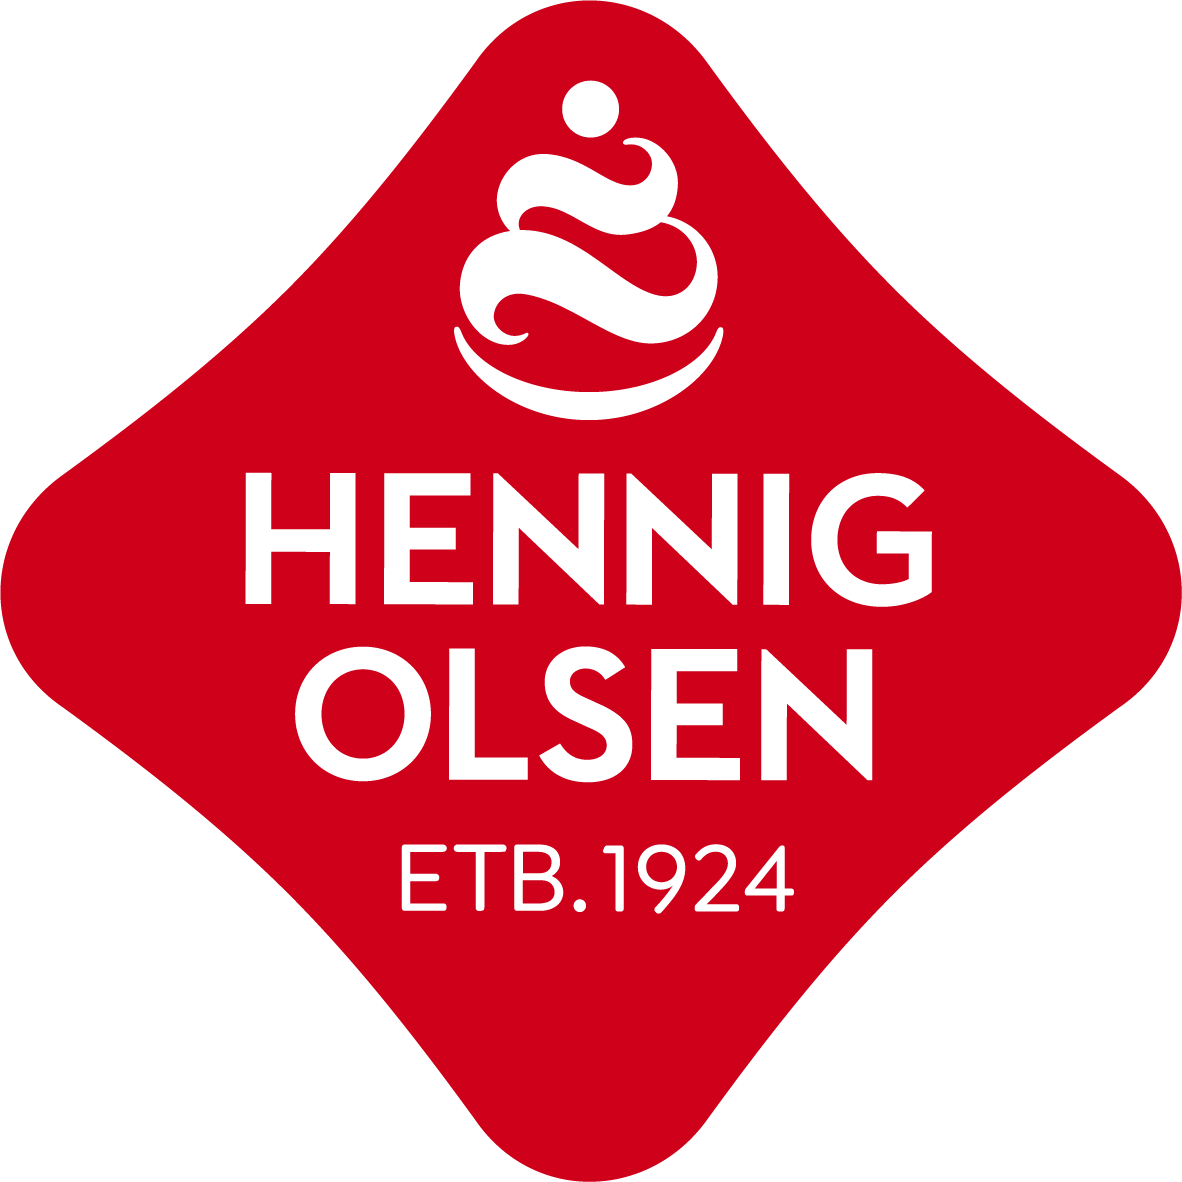 Hennig-Olsen is logo